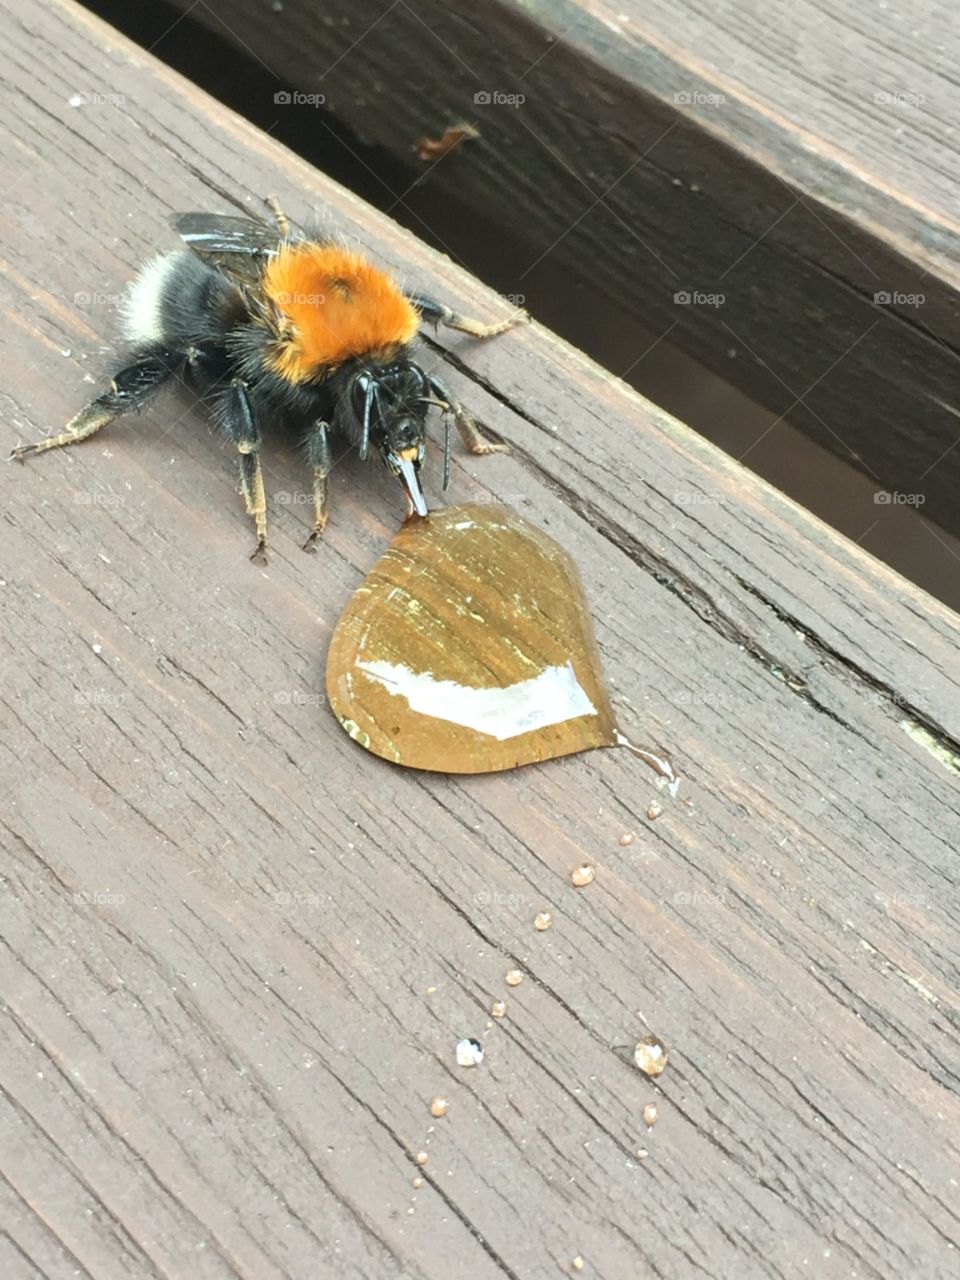 Feeding bees